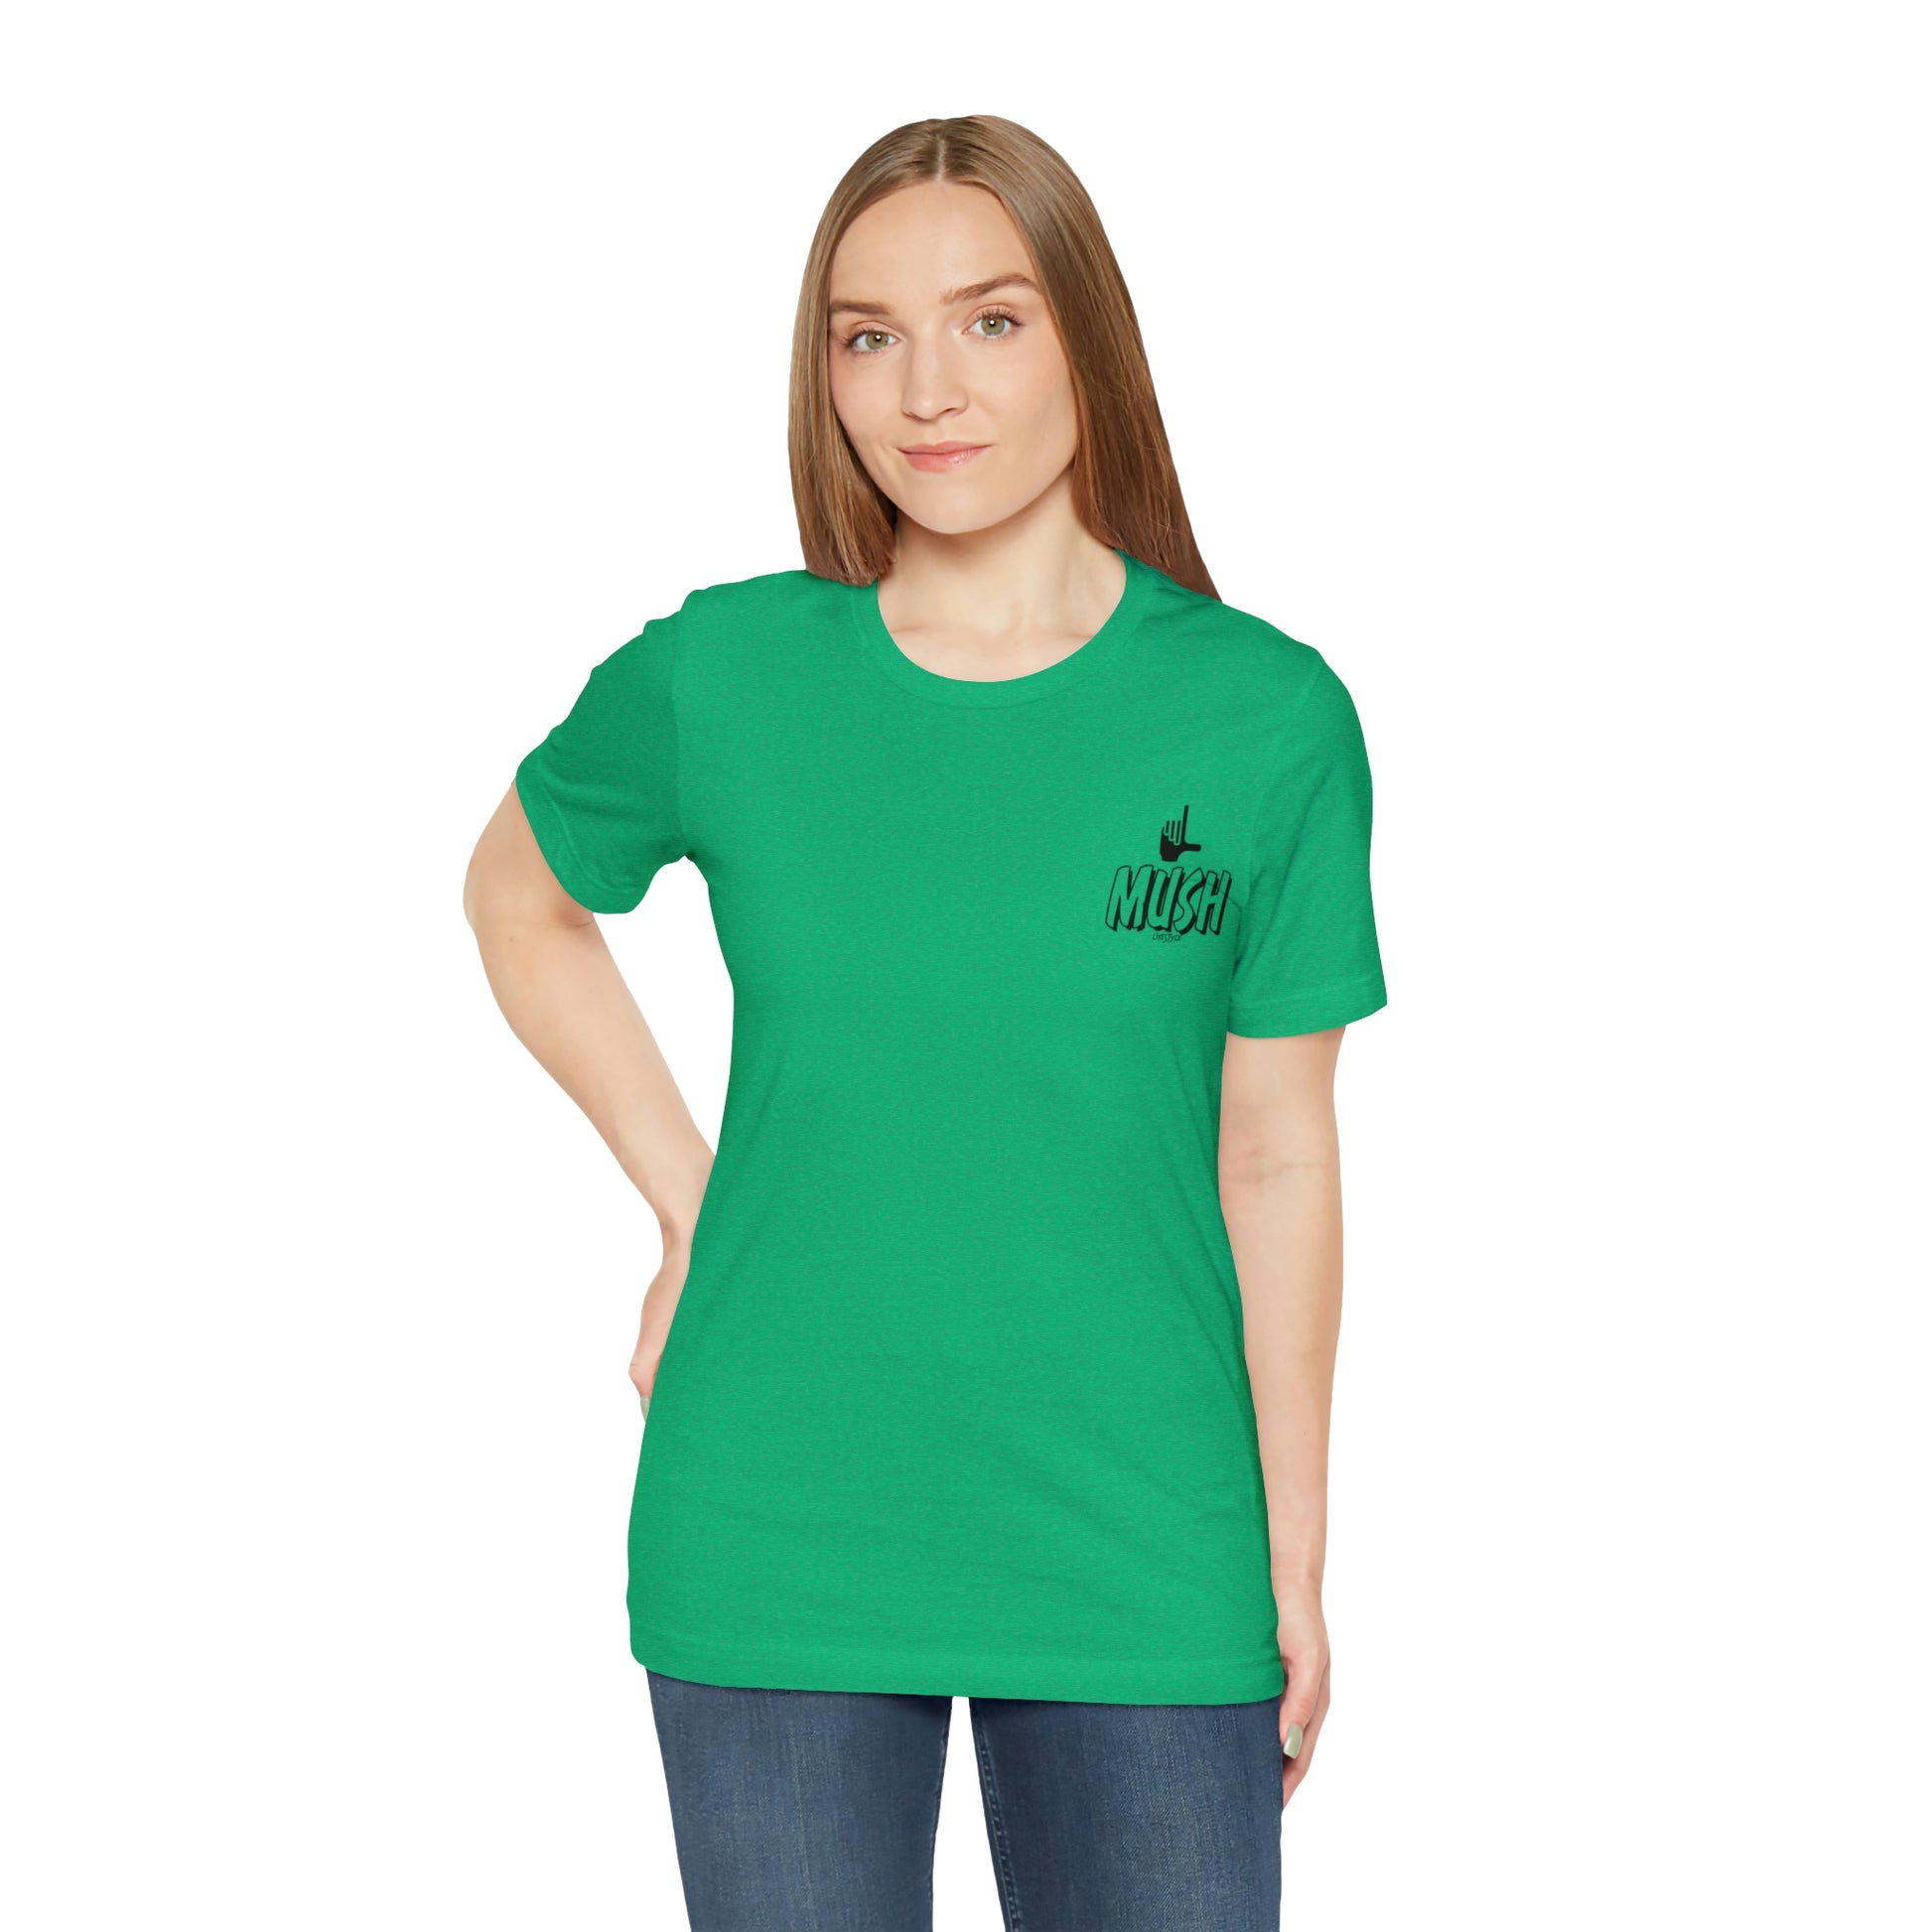 Clothing Paint With Josh Women's Short Sleeve T-shirt 